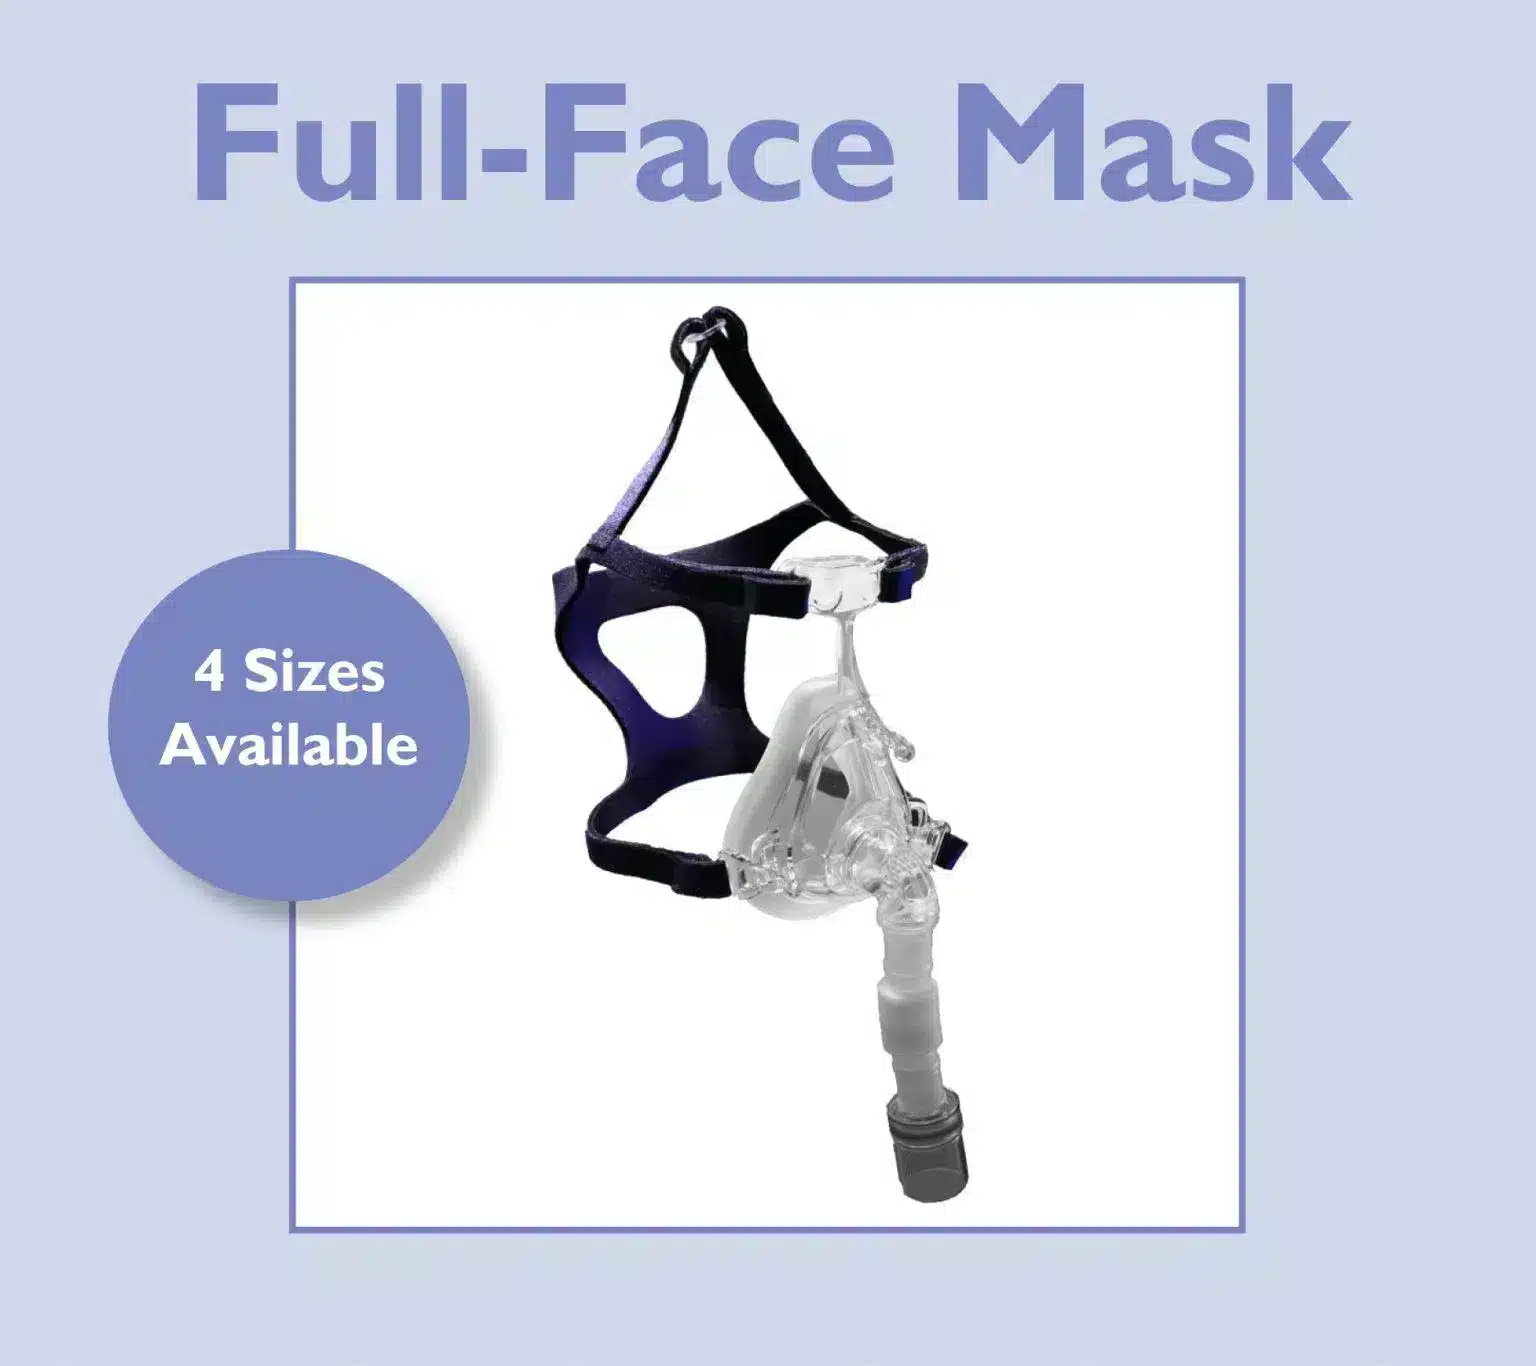 Pedi-Fit Full-Face Mask